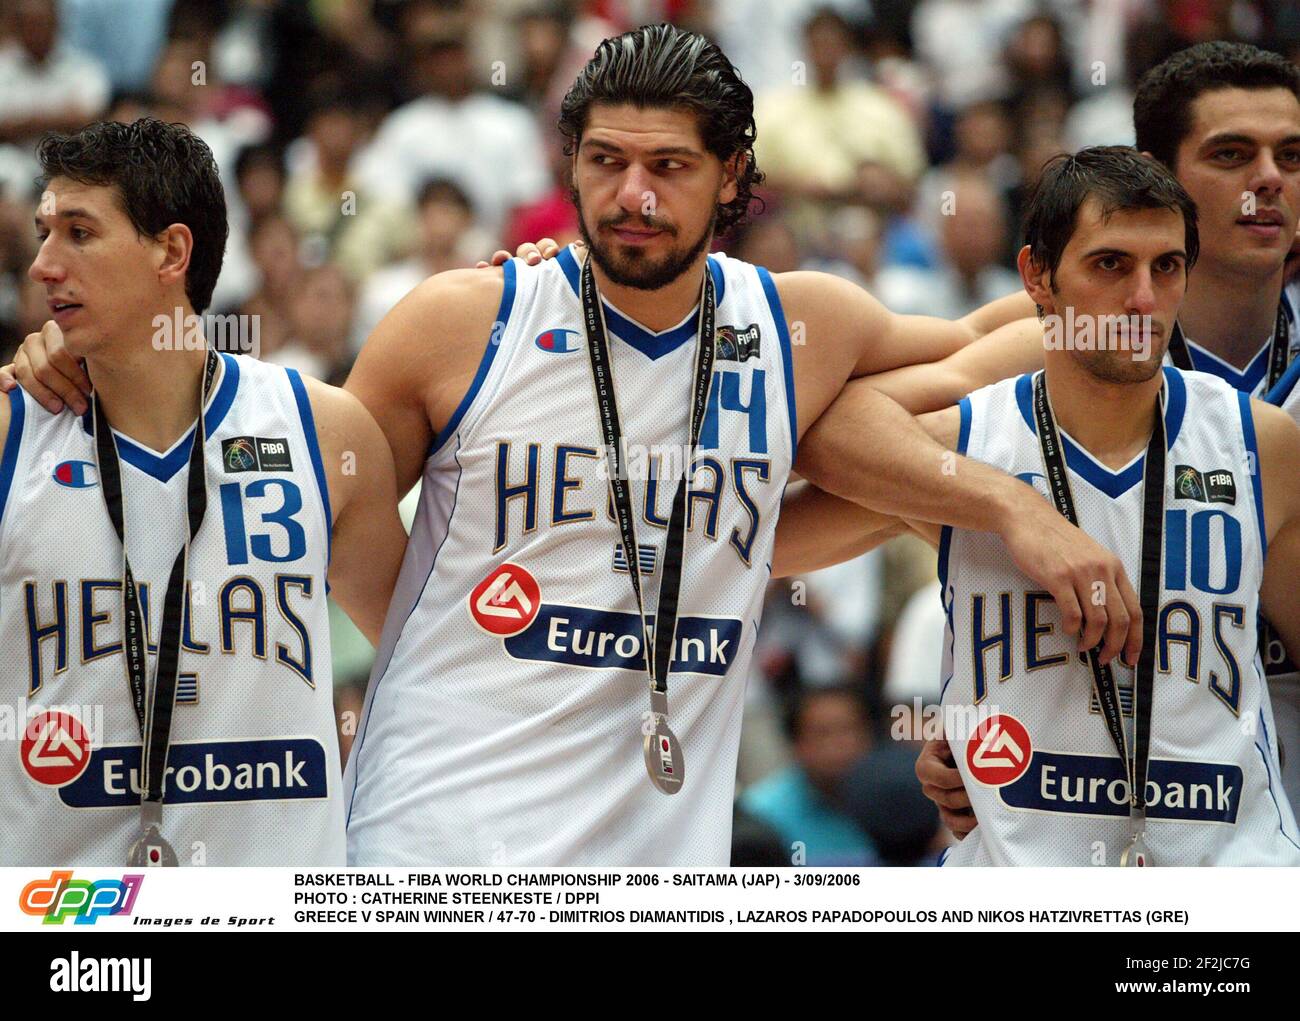 BASKETBALL - FIBA WORLD CHAMPIONSHIP 2006 - SAITAMA (JAP) - 3/09/2006 PHOTO  : CATHERINE STEENKESTE / DPPI GREECE V SPAIN WINNER / 47-70 - DIMITRIOS  DIAMANTIDIS , LAZAROS PAPADOPOULOS AND NIKOS HATZIVRETTAS (GRE Stock Photo  - Alamy